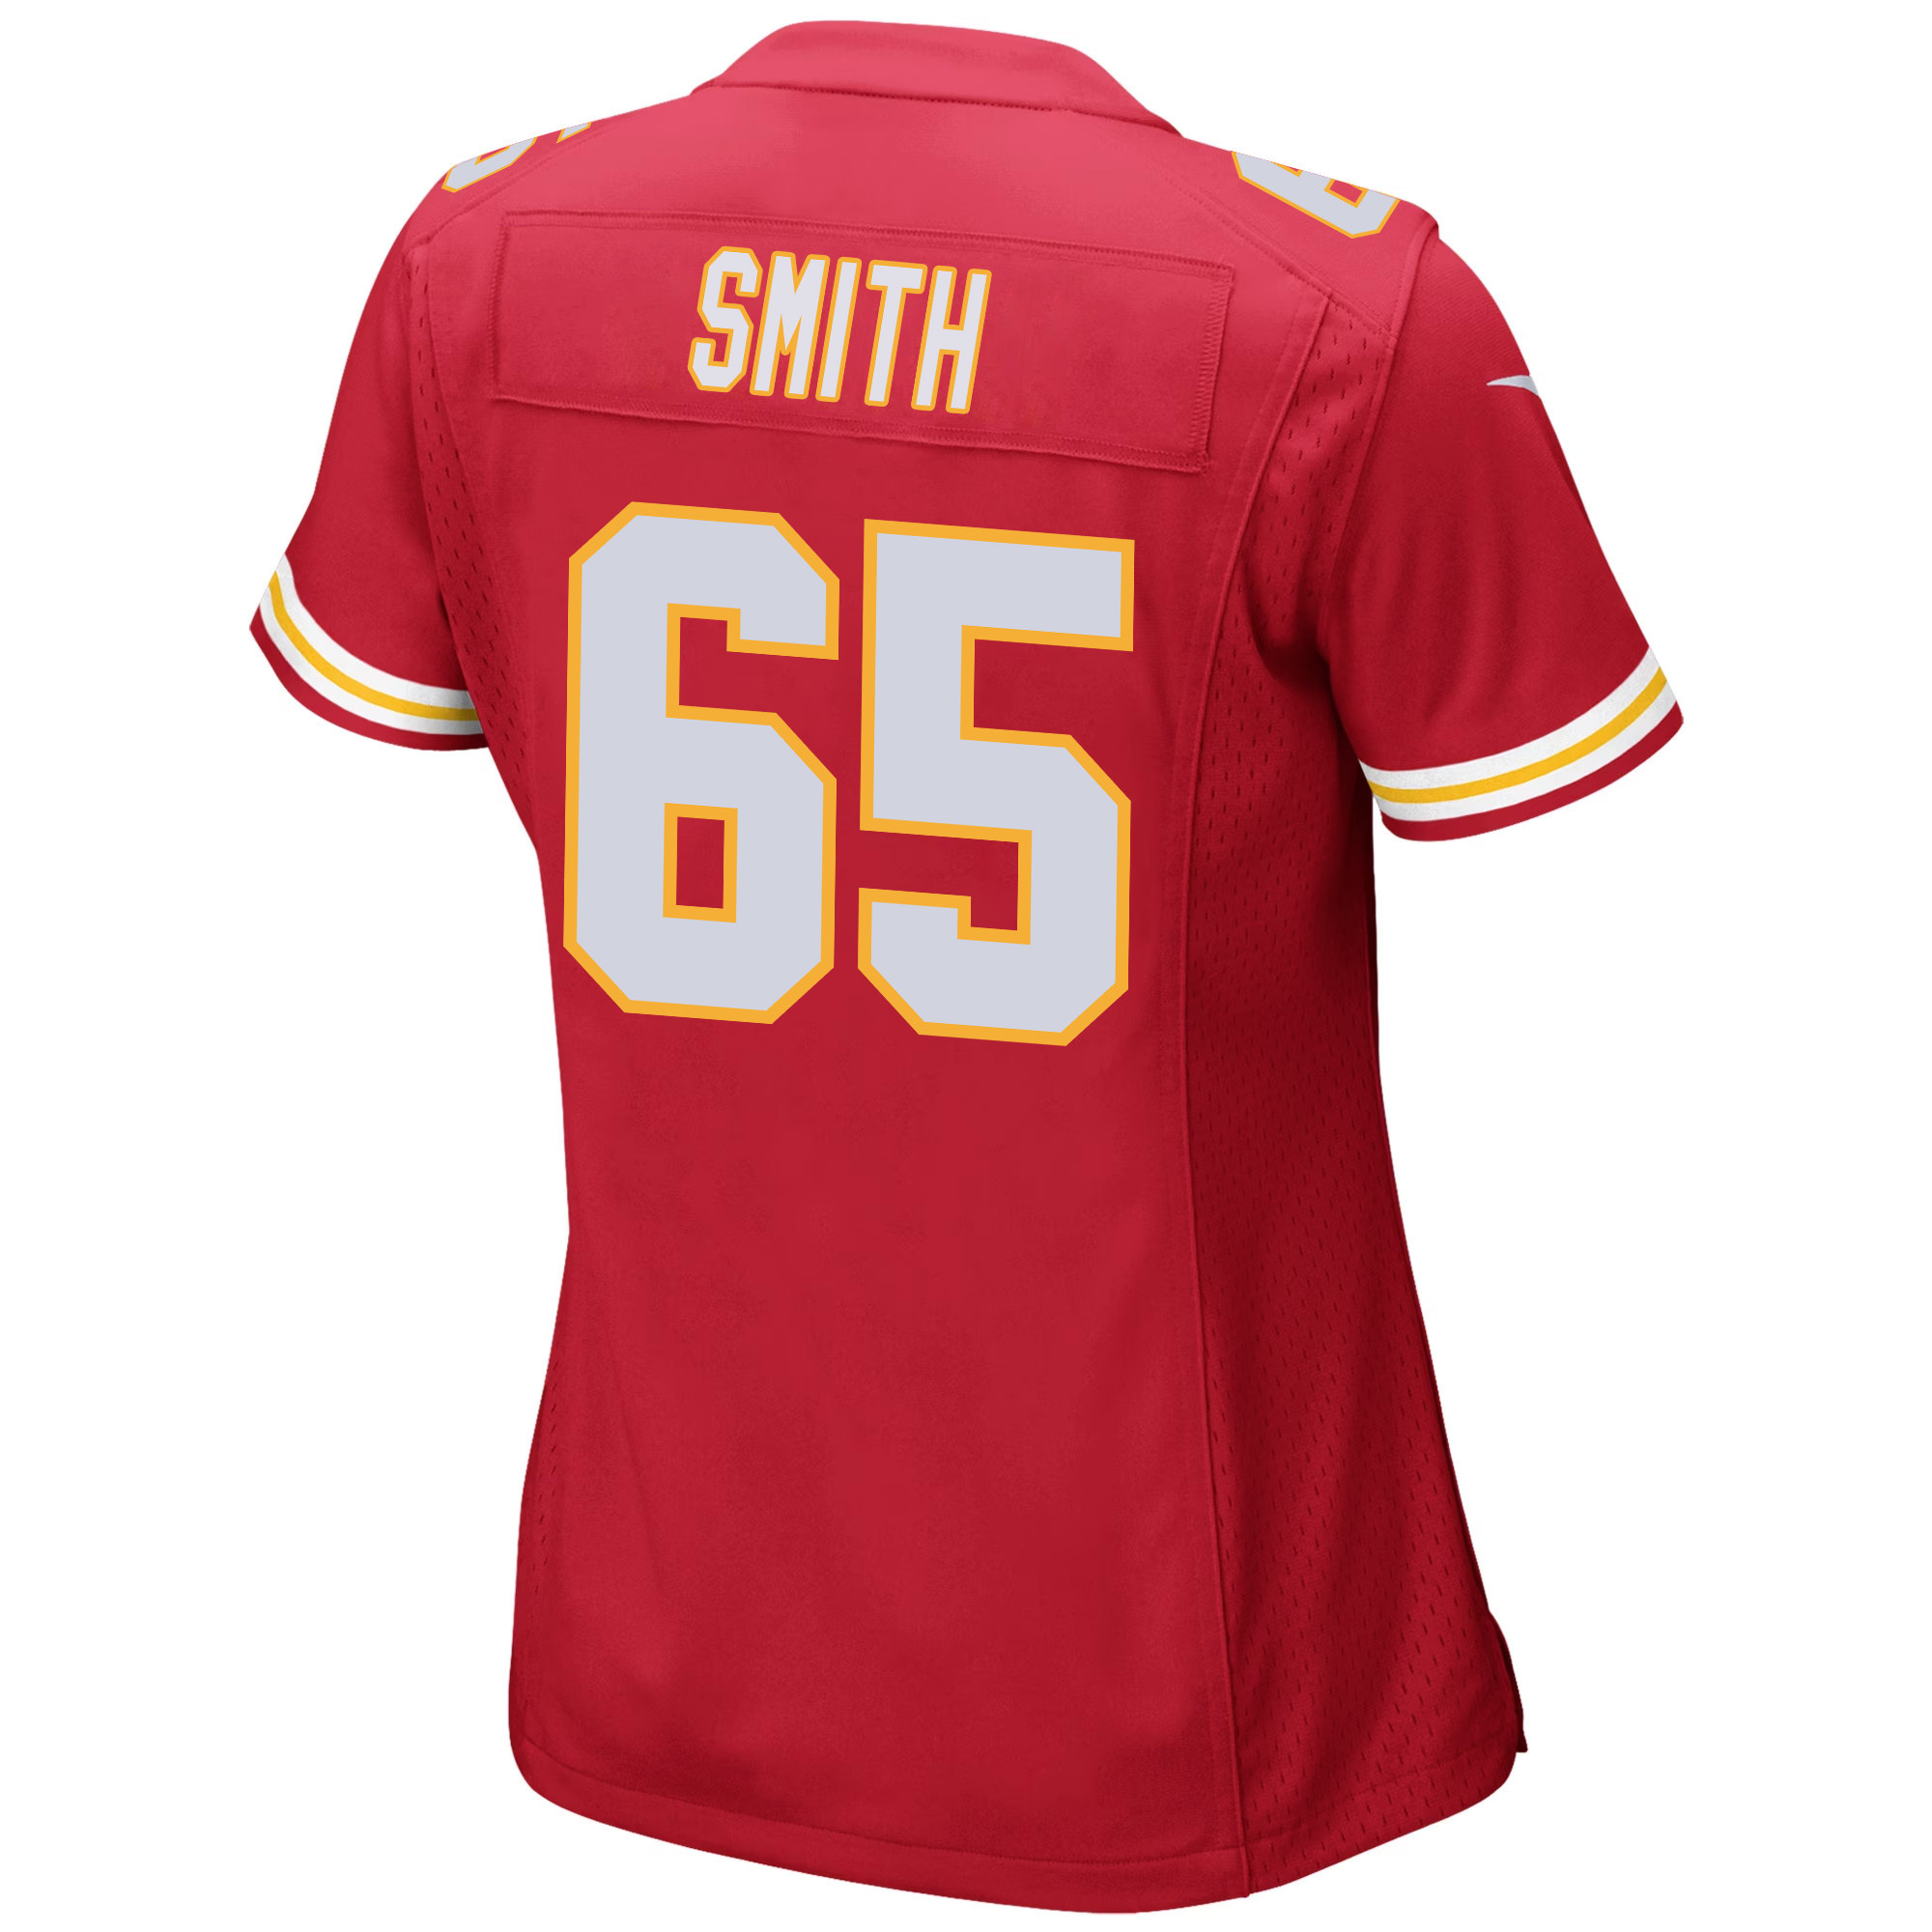 Trey Smith 65 Kansas City Chiefs Super Bowl LVIII Champions 4X Game Women Jersey - Red